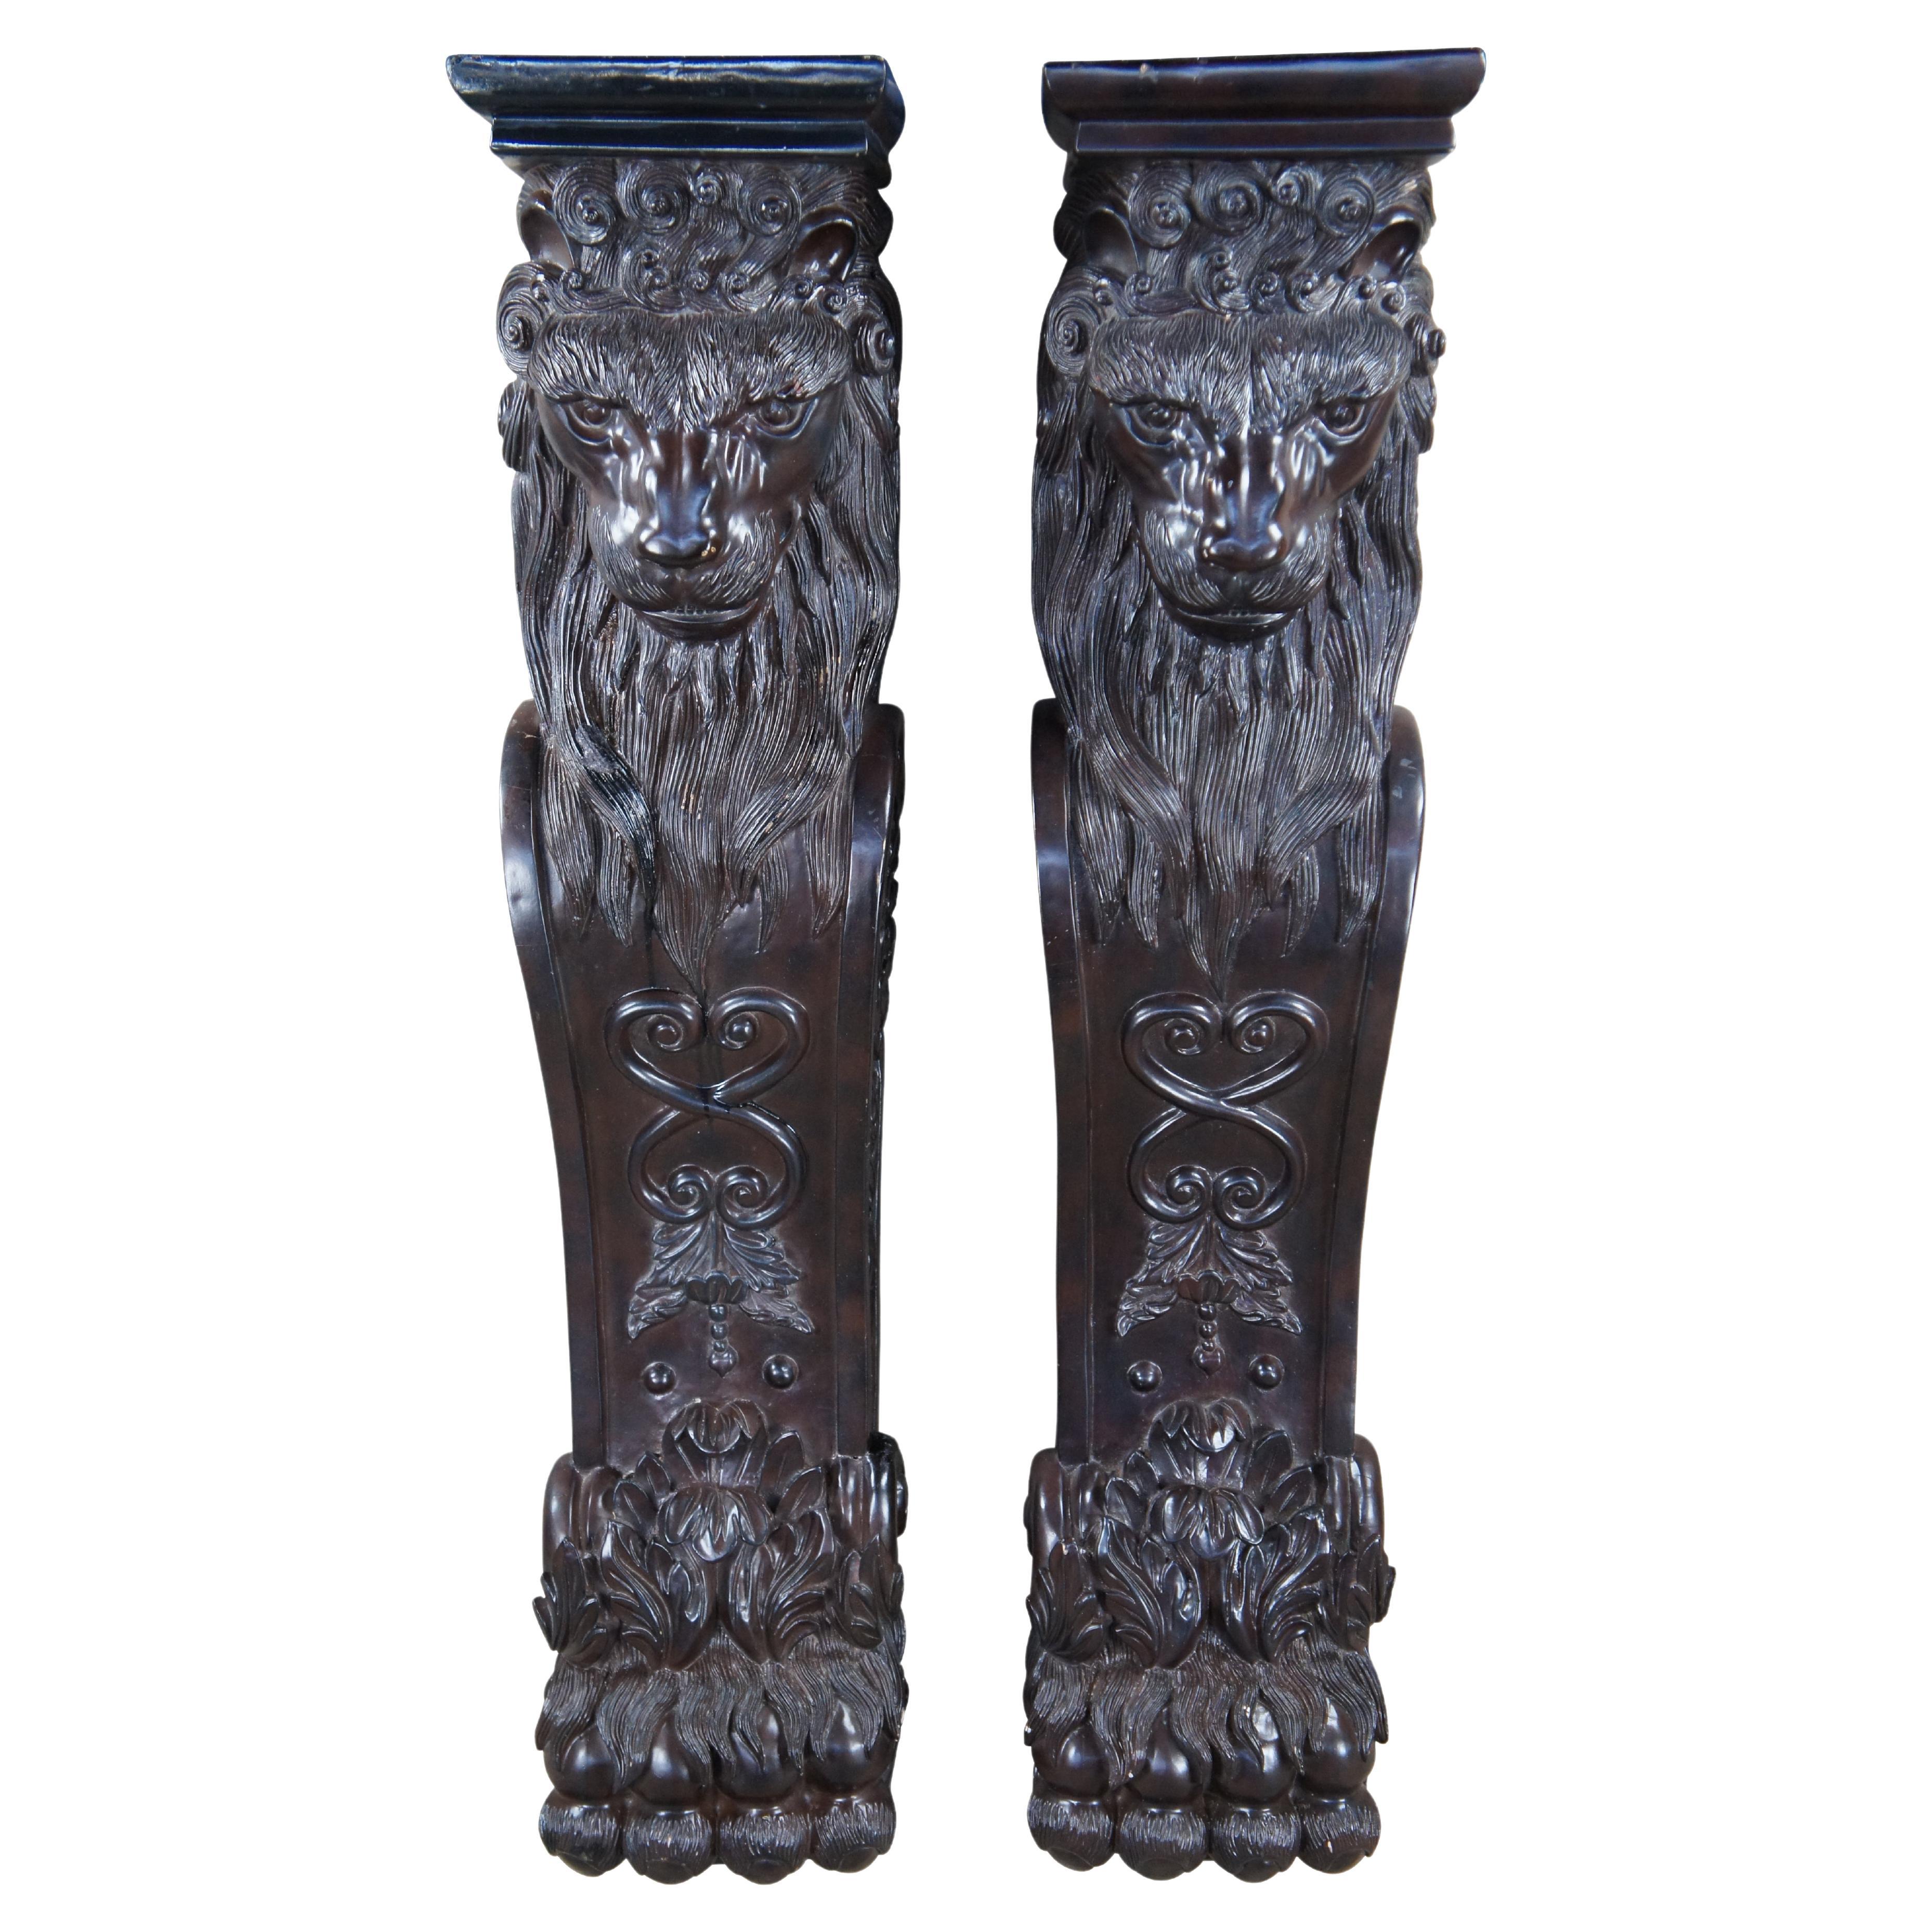 2 Vintage Architectural Lion Head Corbels Columns Pillars Sculpture Stands 49" For Sale